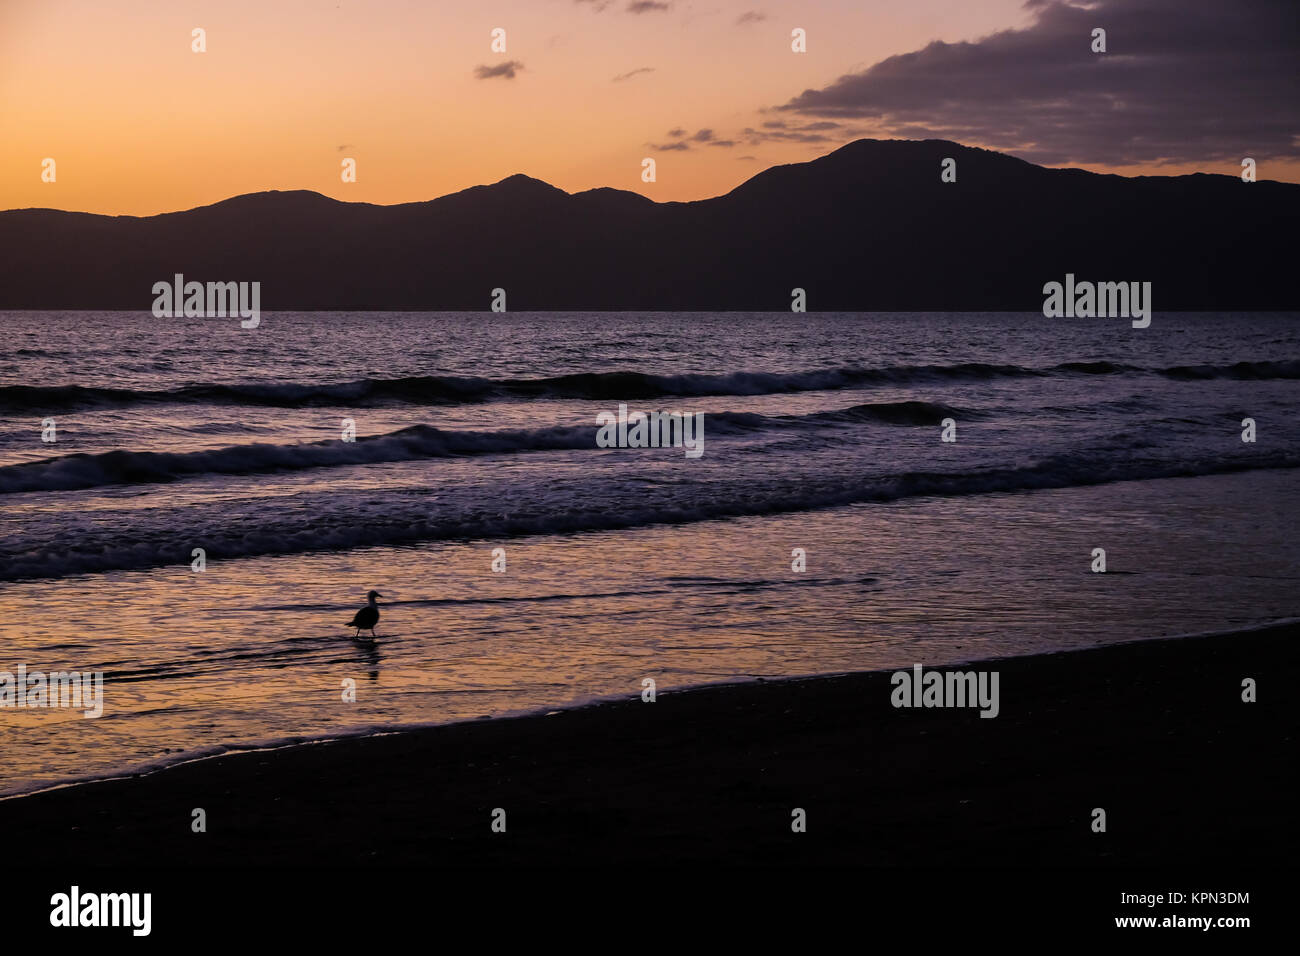 Moody Sunset Seascape with a Seagull Silhouette (Kapiti Coast, New Zealand) Stock Photo